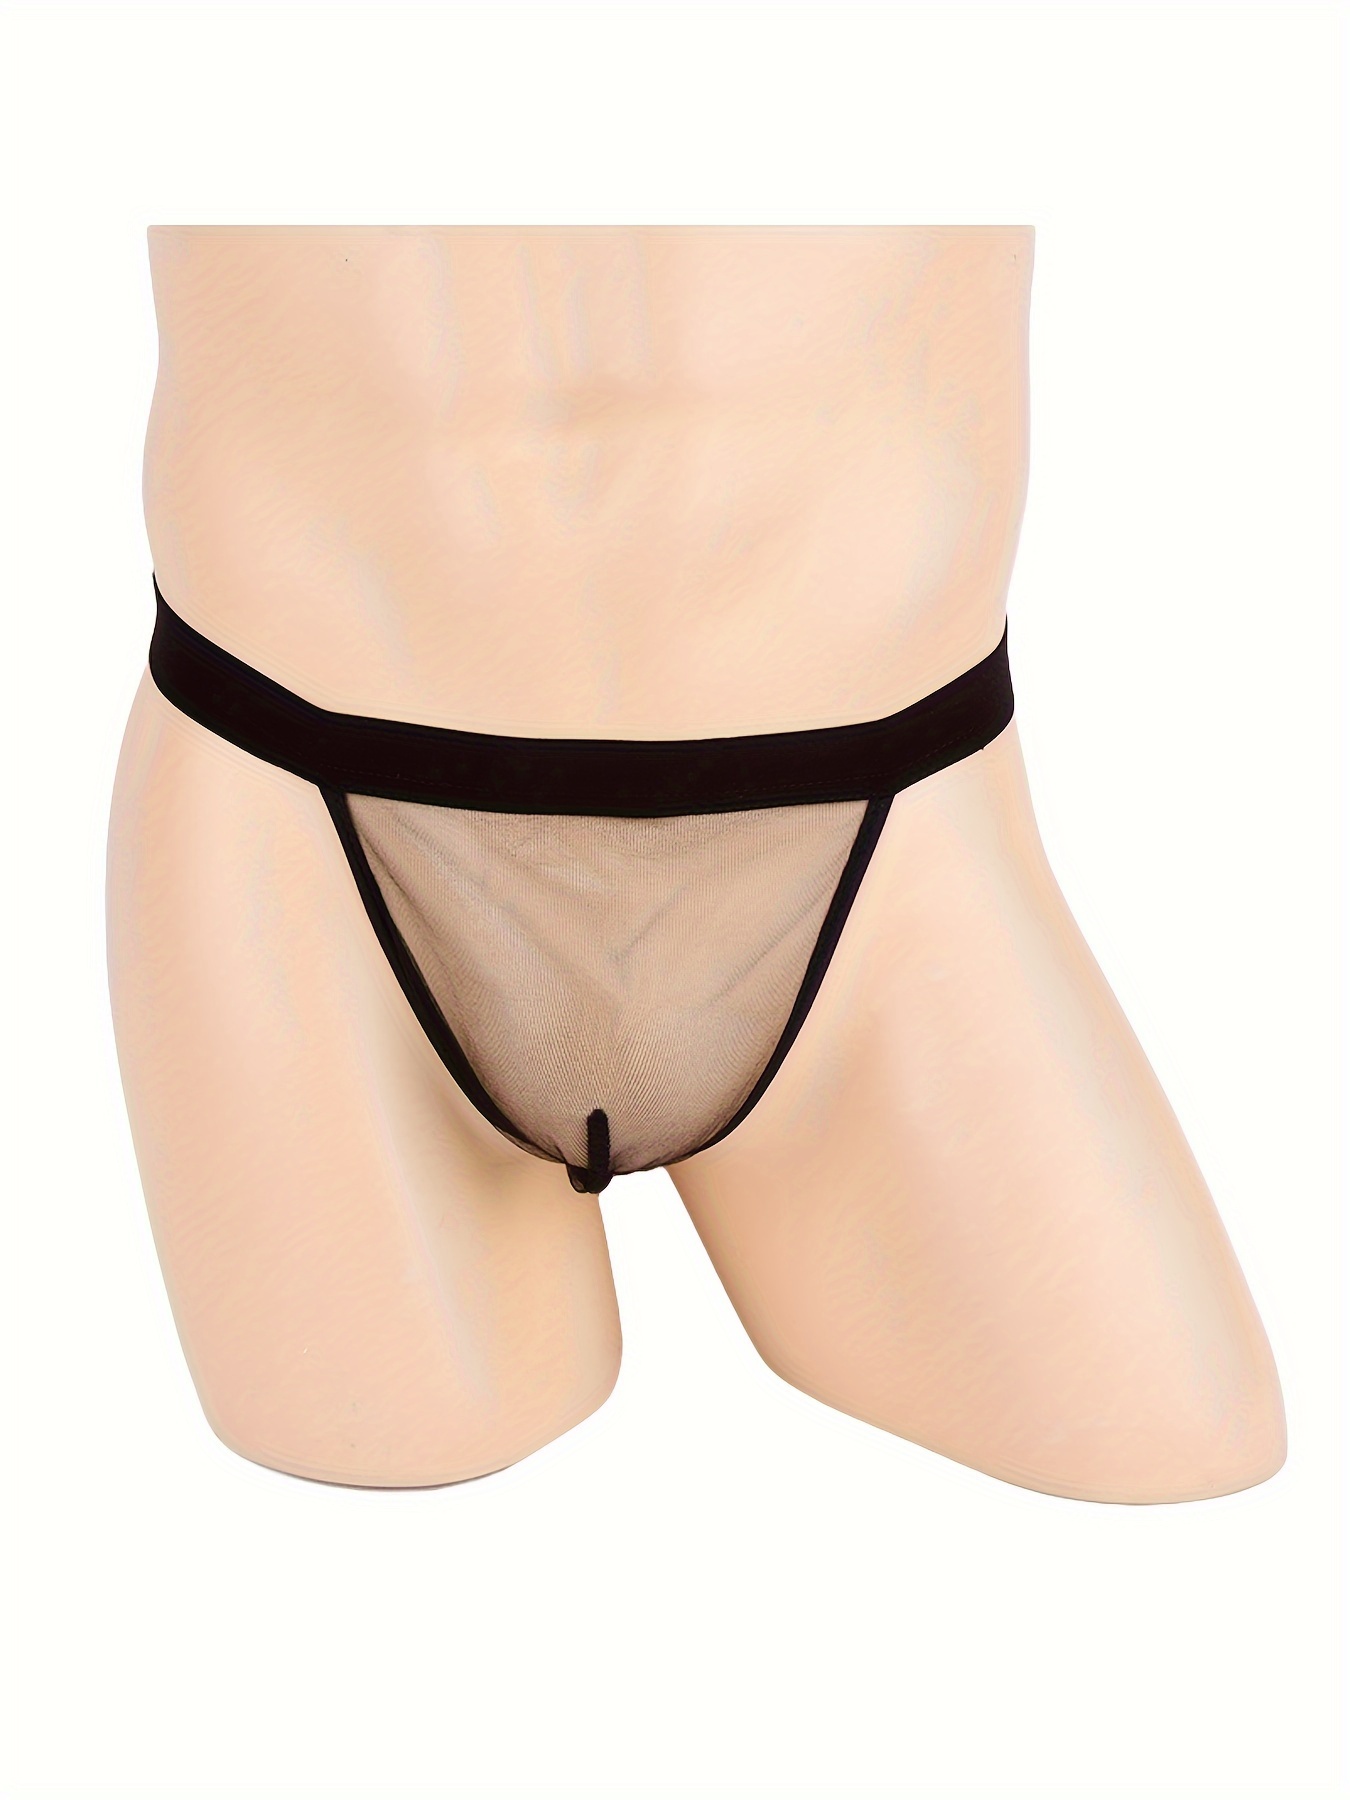 K3267 Hot Sexy Mens Underwear Thong Skimpy Pouch C-thru Fishnet Cheeky Back